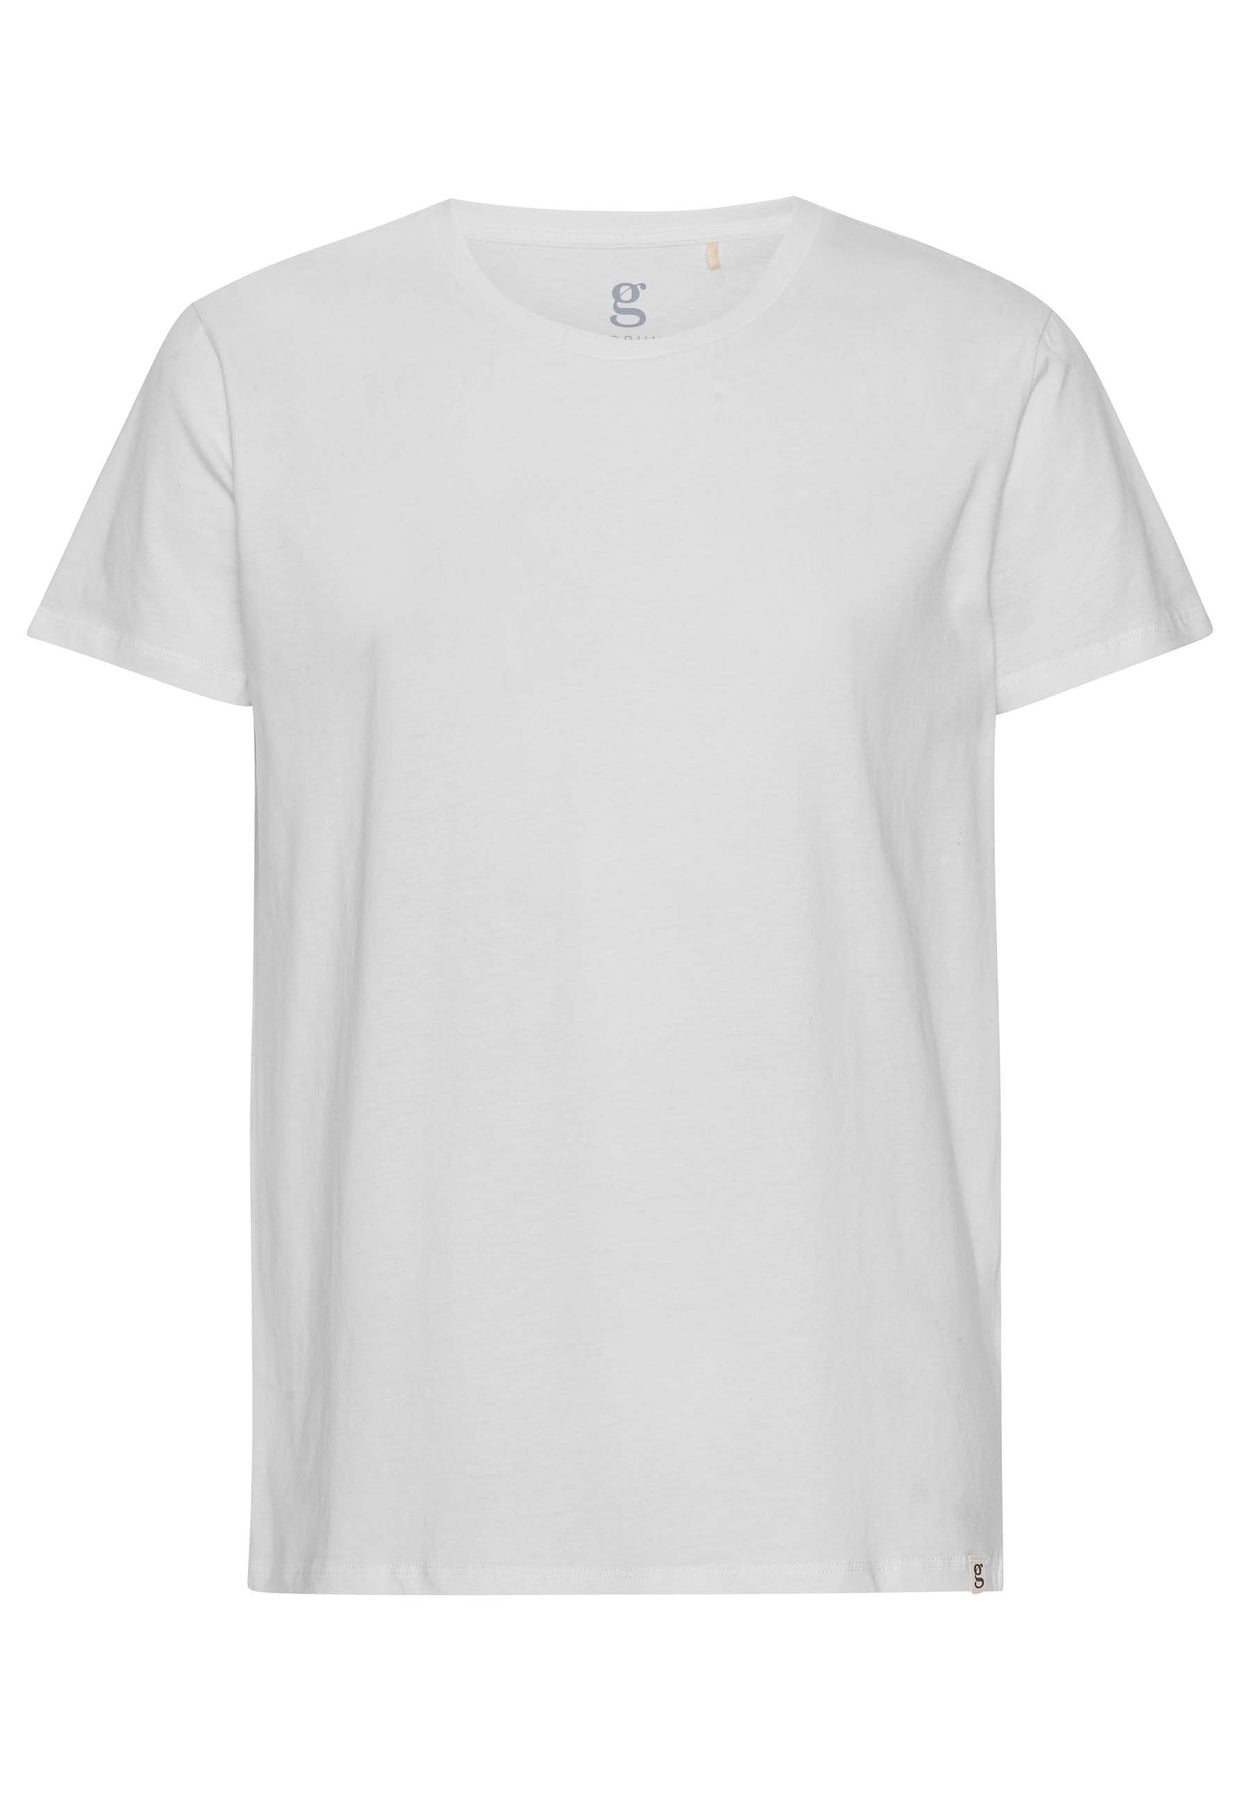 GROBUND Alfie t-shirten - den i hvid